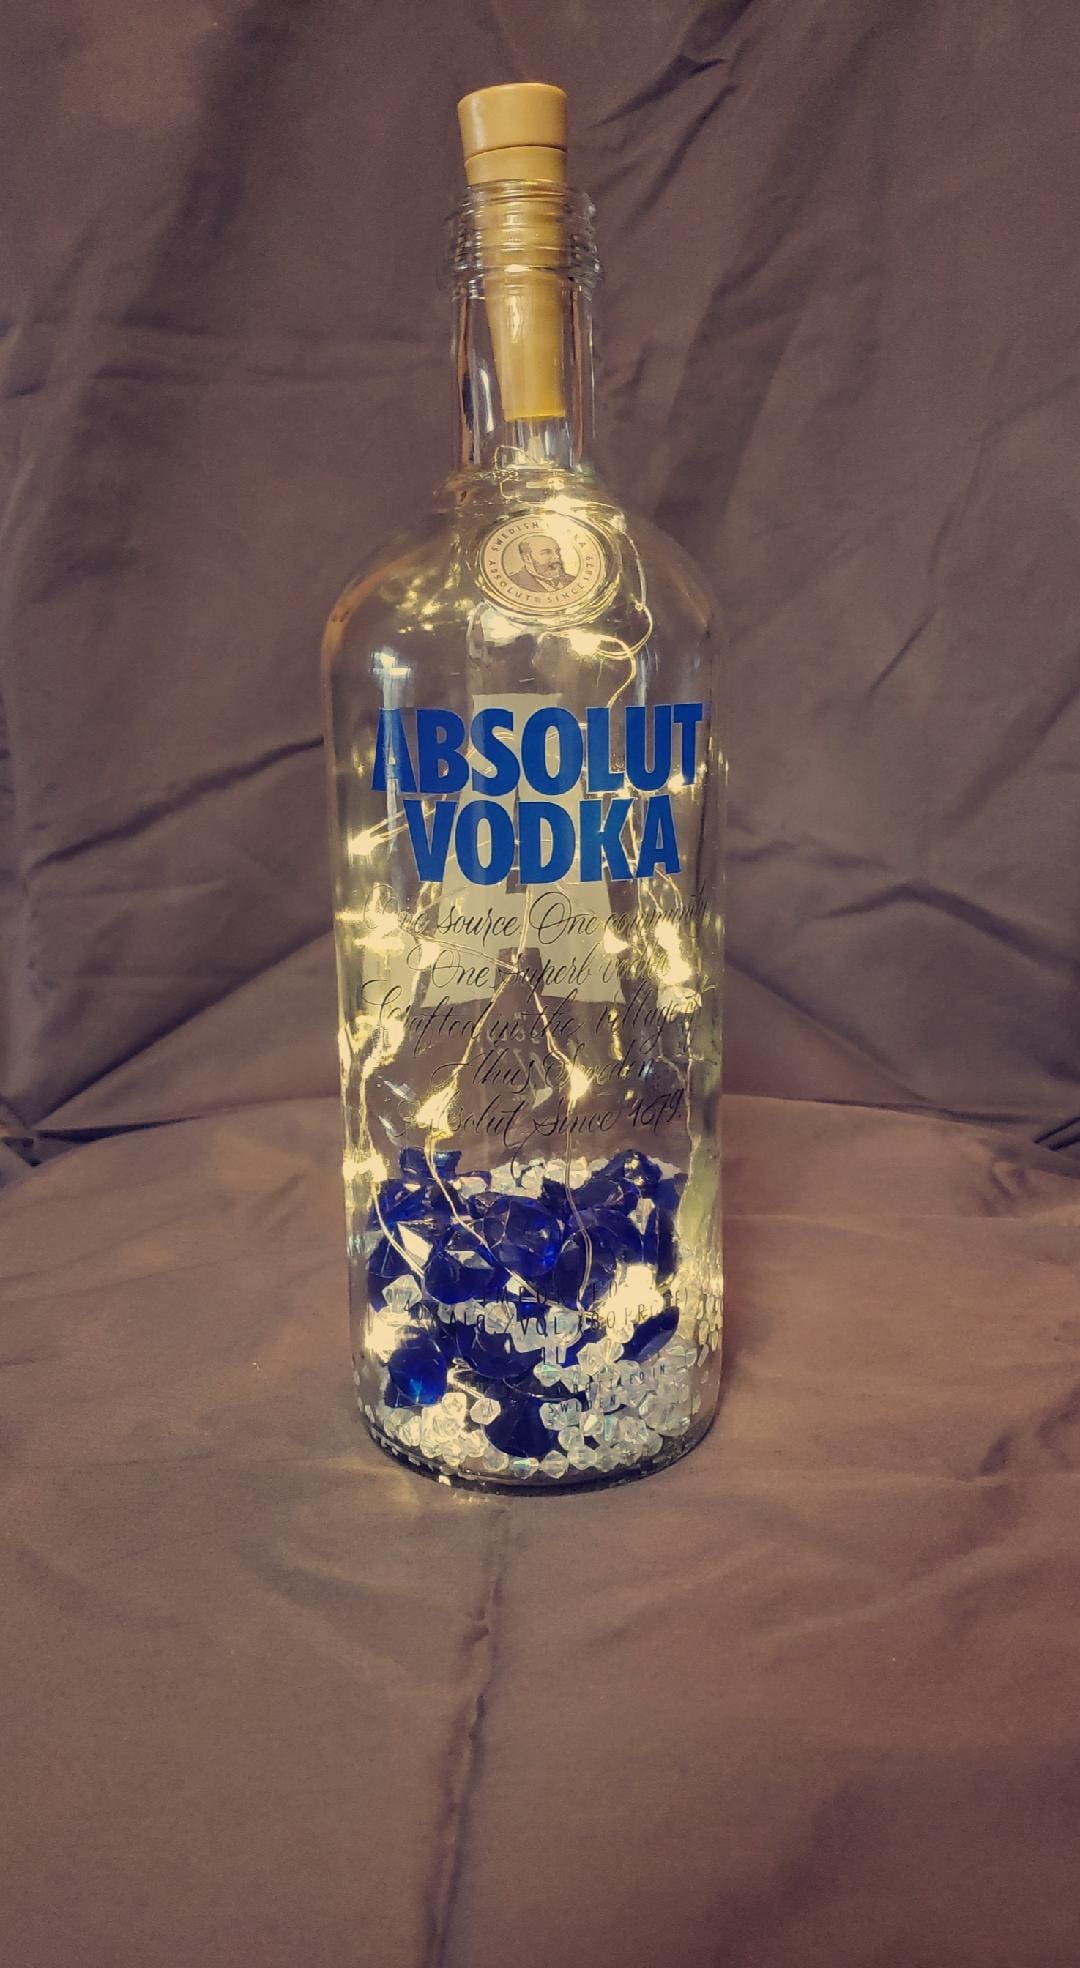 Buy Absolut Vodka Bottle with 40% alcohol Online in Bhubaneswar